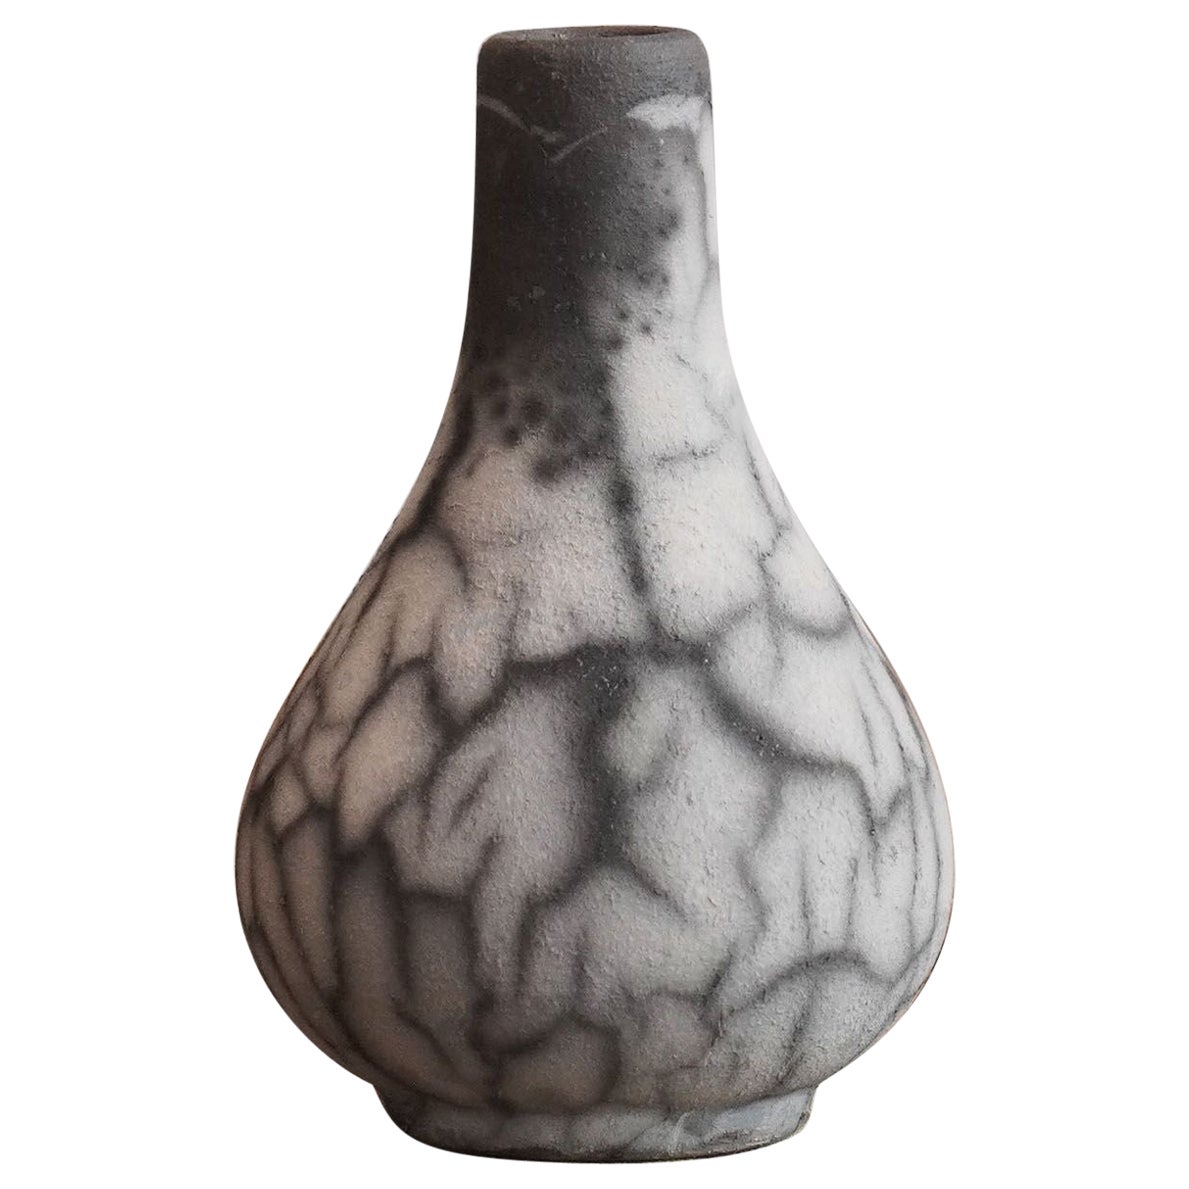 Hana W Mini Vase Raku Ceramic, Smoked Raku, Handmade Home Decor Gift For Sale